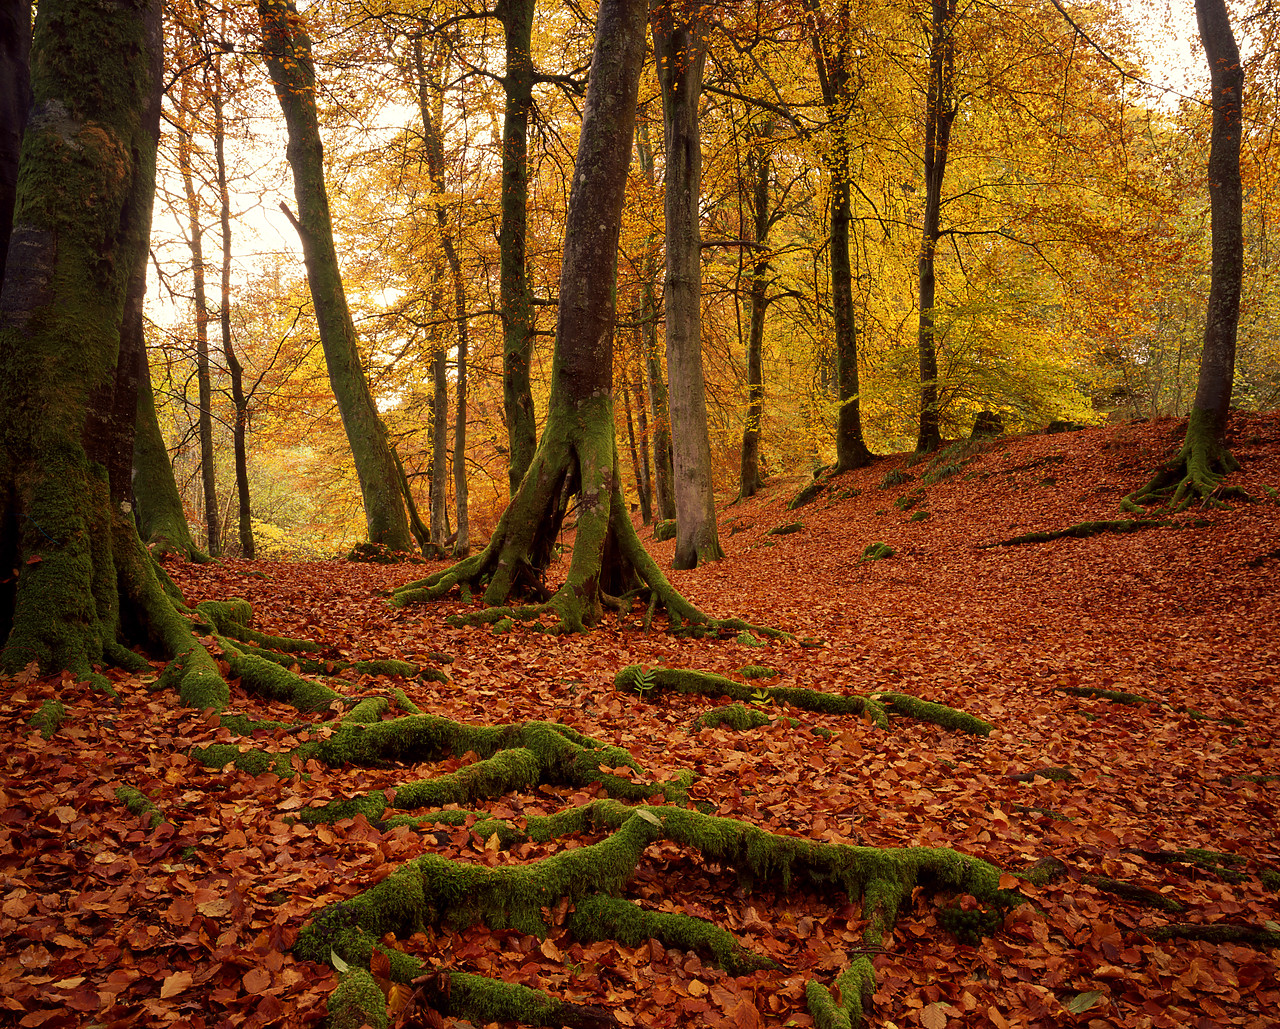 #970487-2 - The Birks in Autumn, Aberfeldy, Tayside Region, Scotland